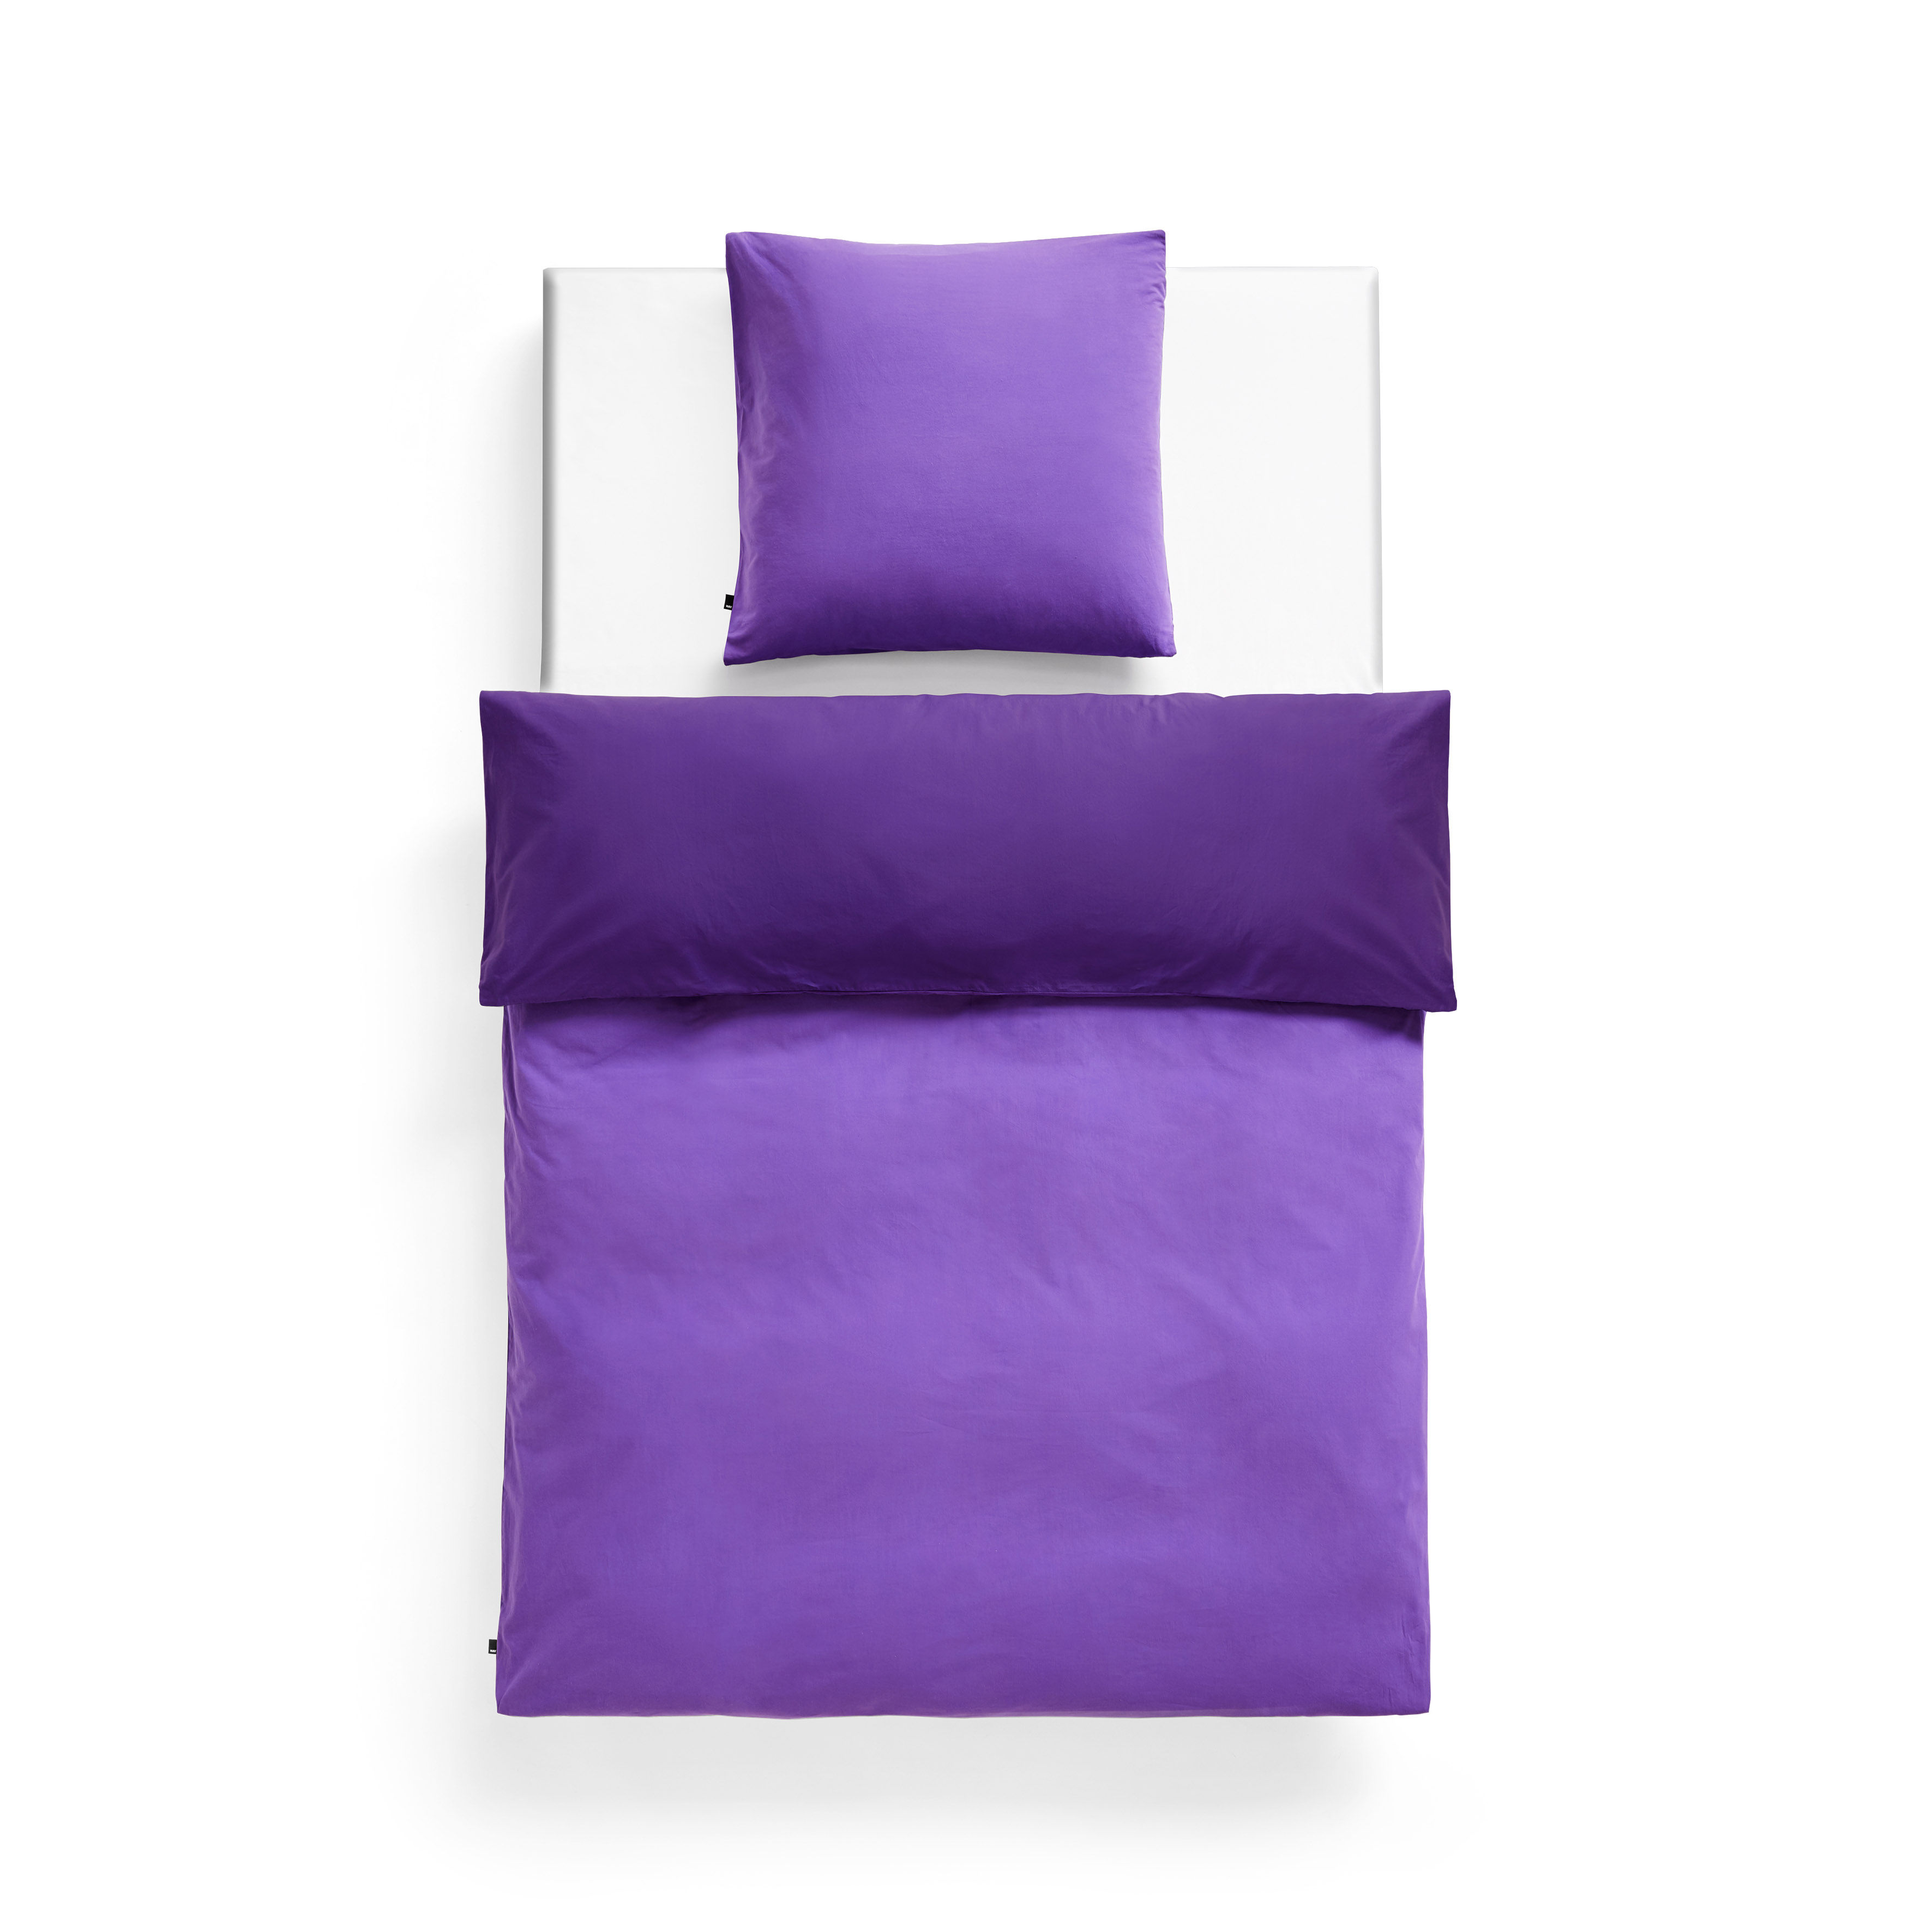 https://media.madeindesign.com/nuxeo/products/4/1/taie-d-oreiller-65-x-65-cm-duo-violet-vif_madeindesign_394663_original.jpg